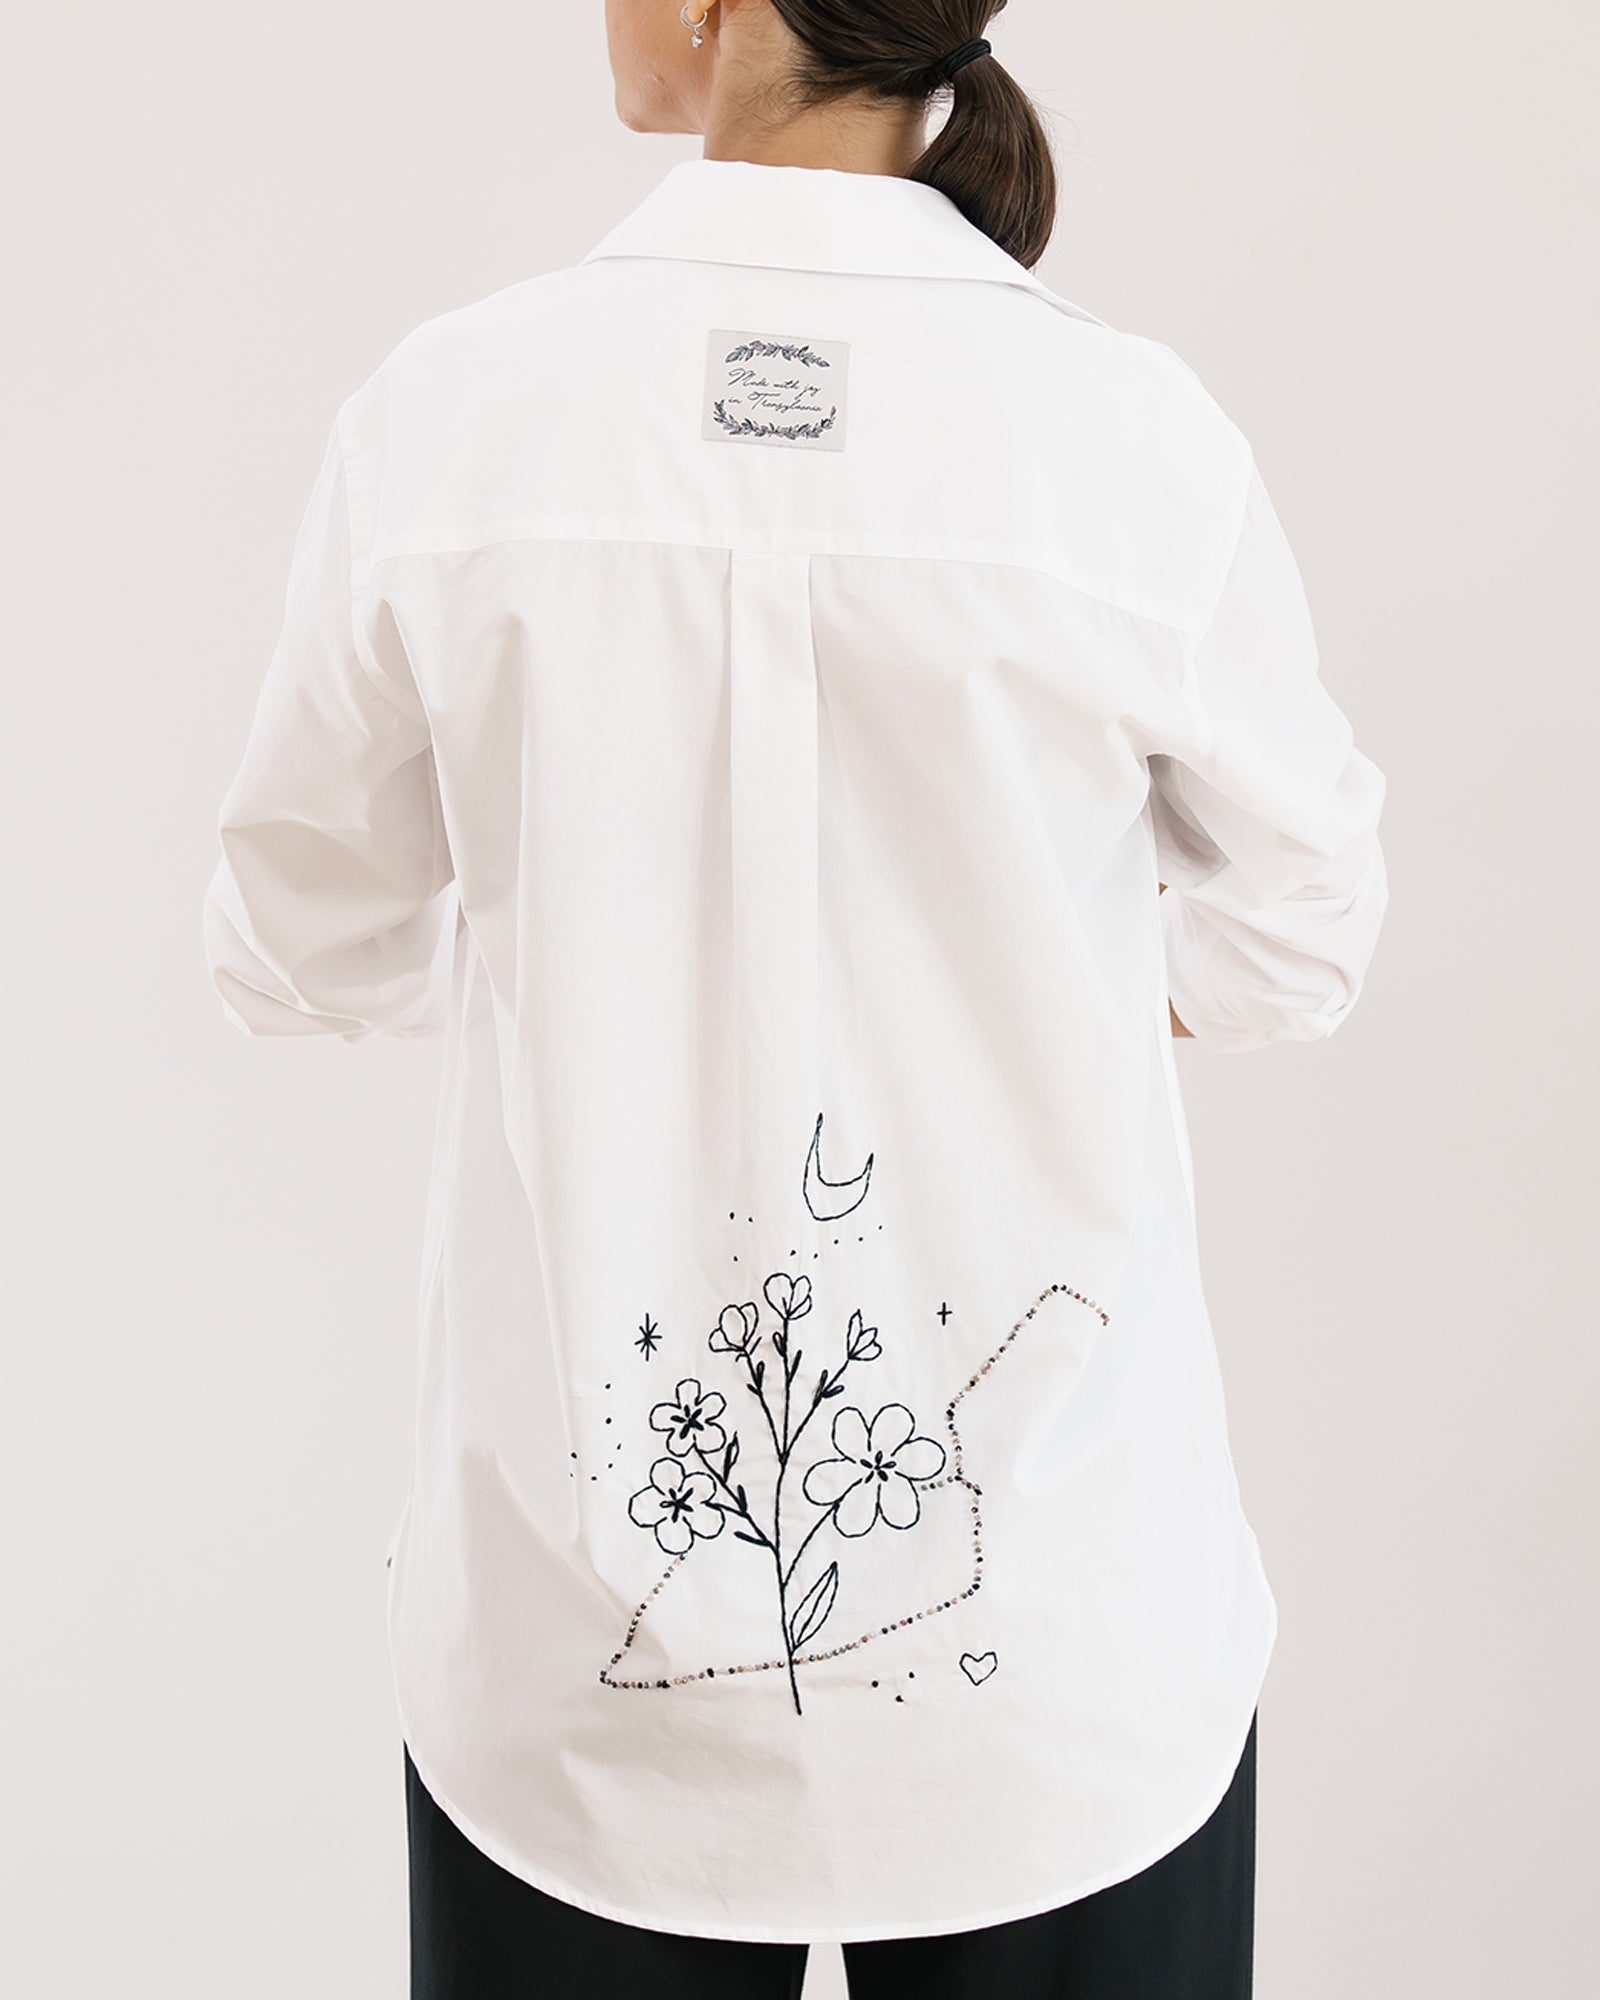 Women's hand-embroidered shirt "Art Lines"